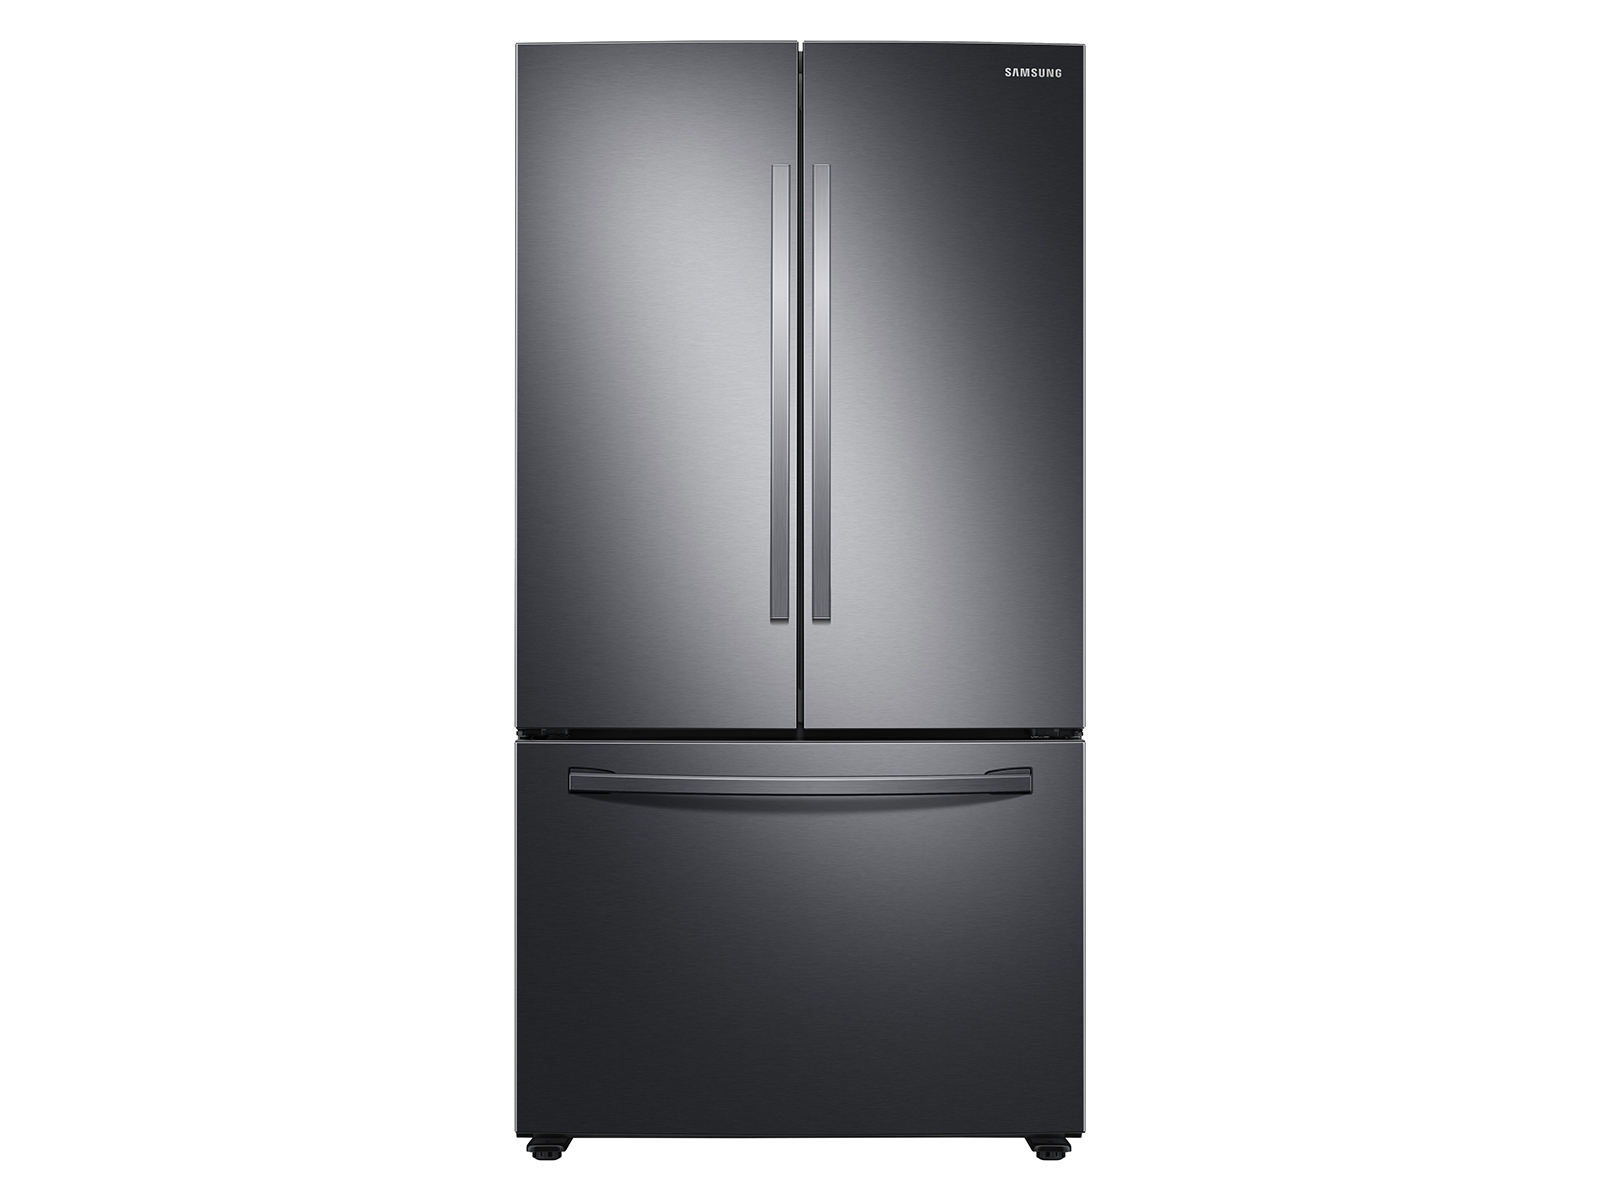 Photos - Fridge Samsung 28 cu. ft. Large Capacity 3-Door French Door Refrigerator with Aut 